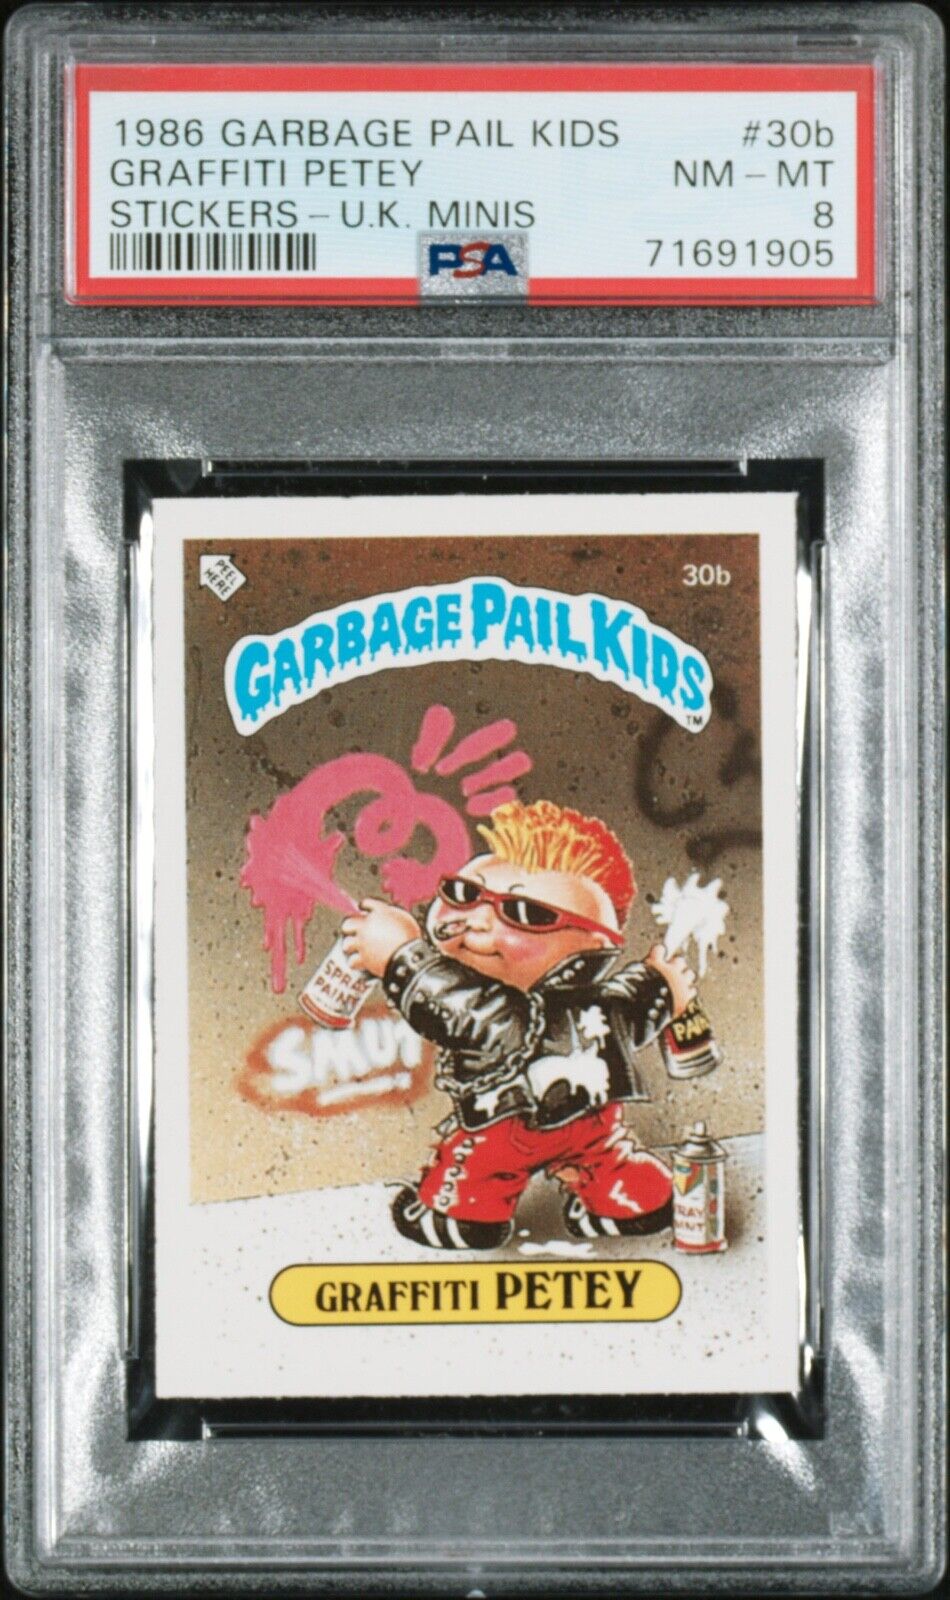 1986 Topps Garbage Pail Kids Stickers #30b U.K. Minis Graffiti Petey PSA 8 NM-MT